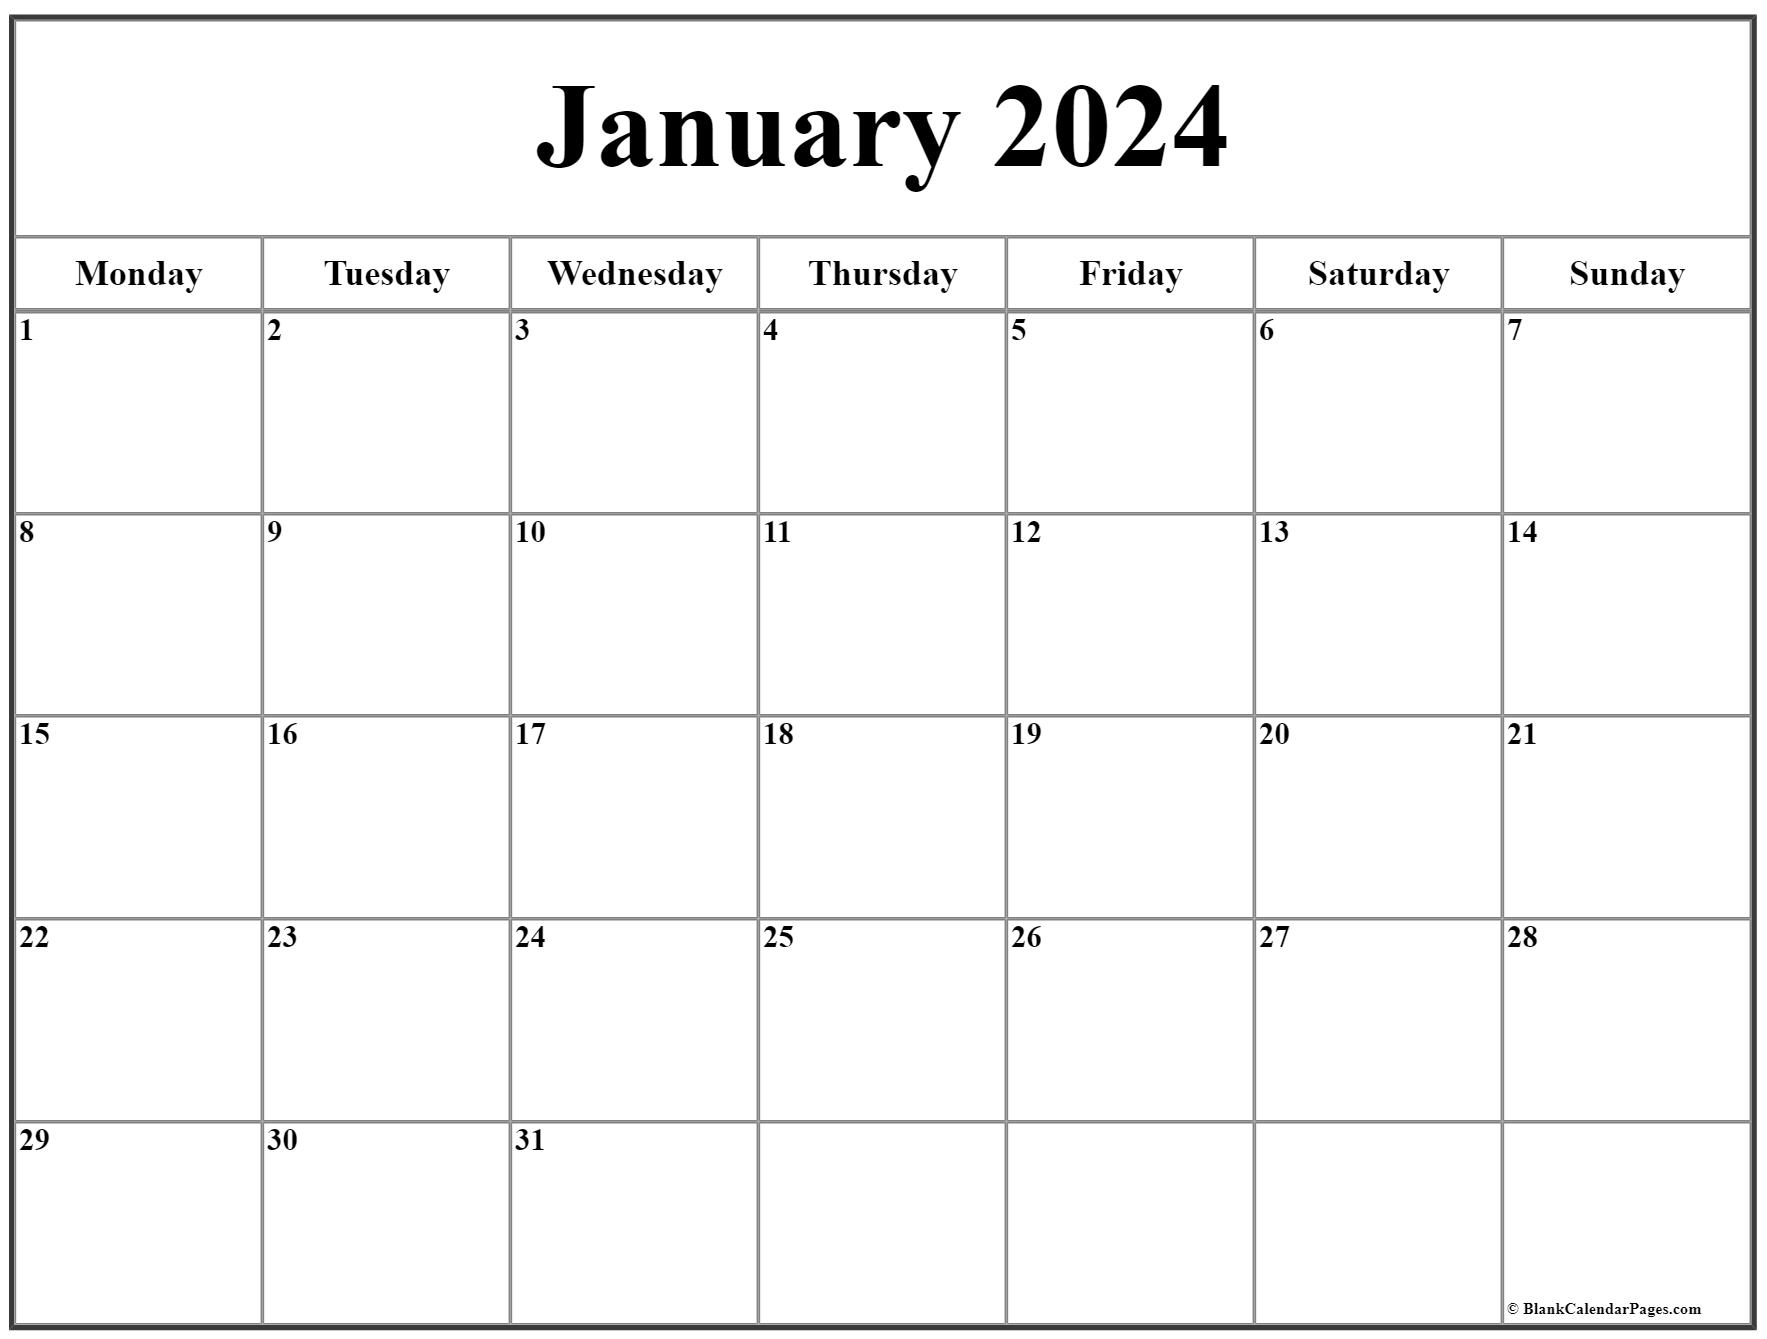 january-2020-monday-calendar-monday-to-sunday